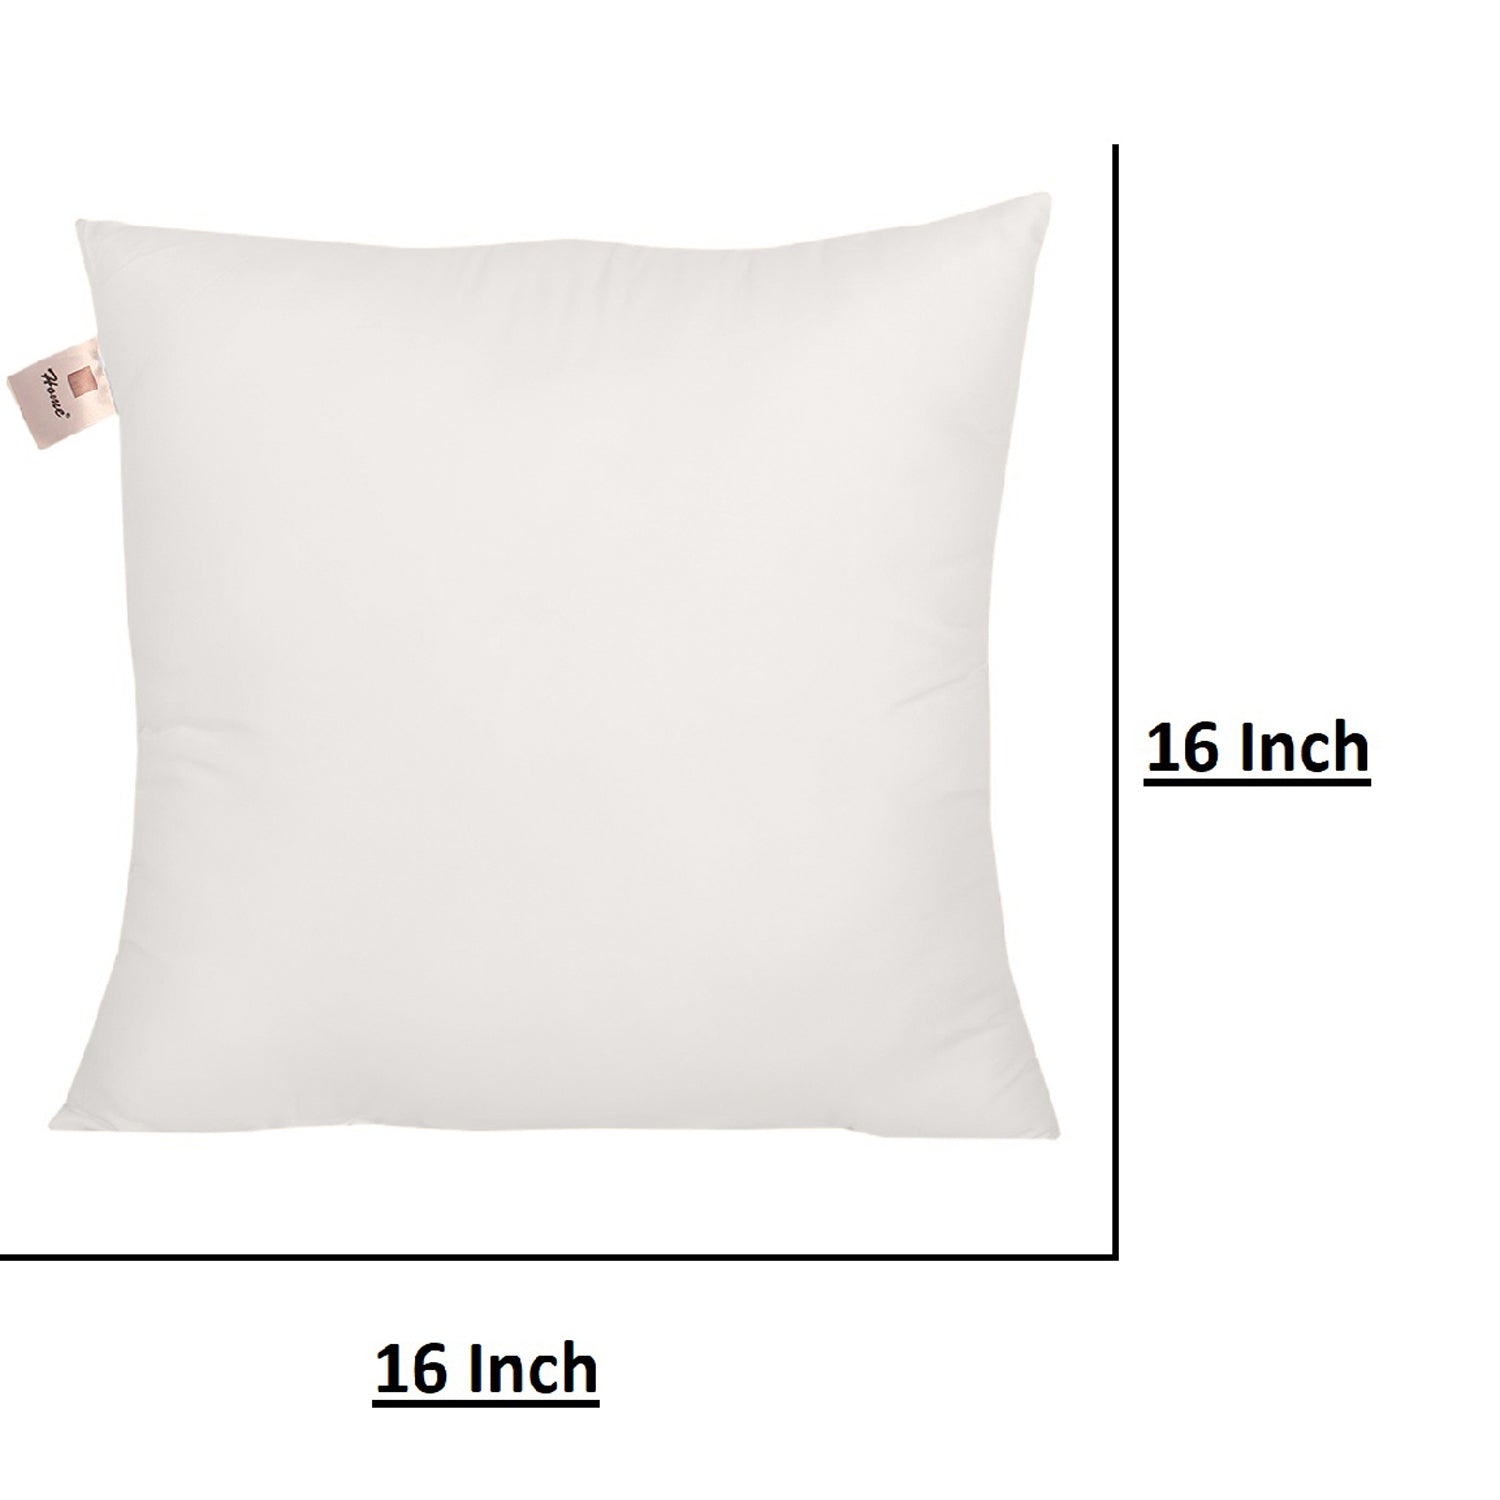 Micro Fiber Cushion Insert Extra Soft, White | 16x16 Inch